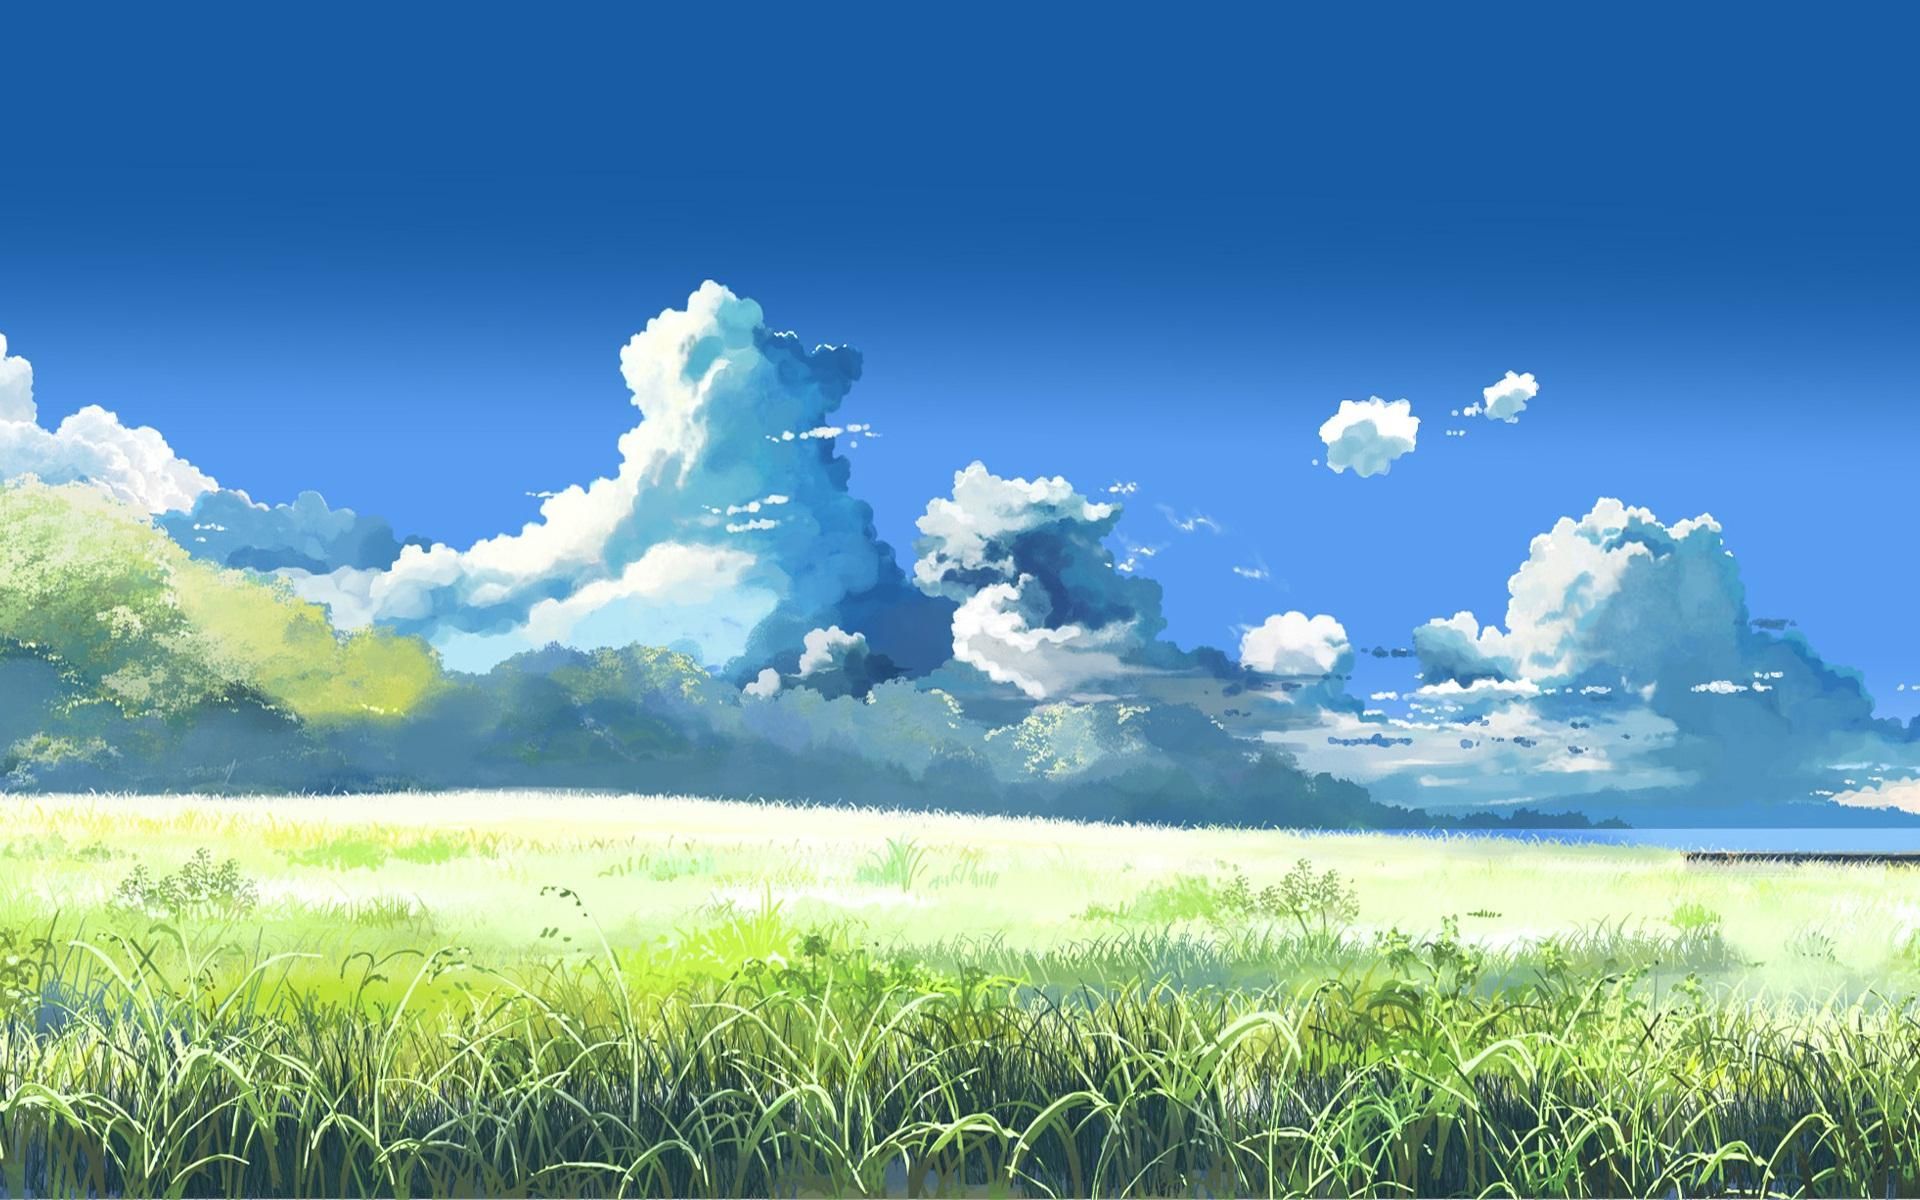 Anime landscape 1920x1200. Anime scenery wallpaper, Anime scenery, Scenery wallpaper